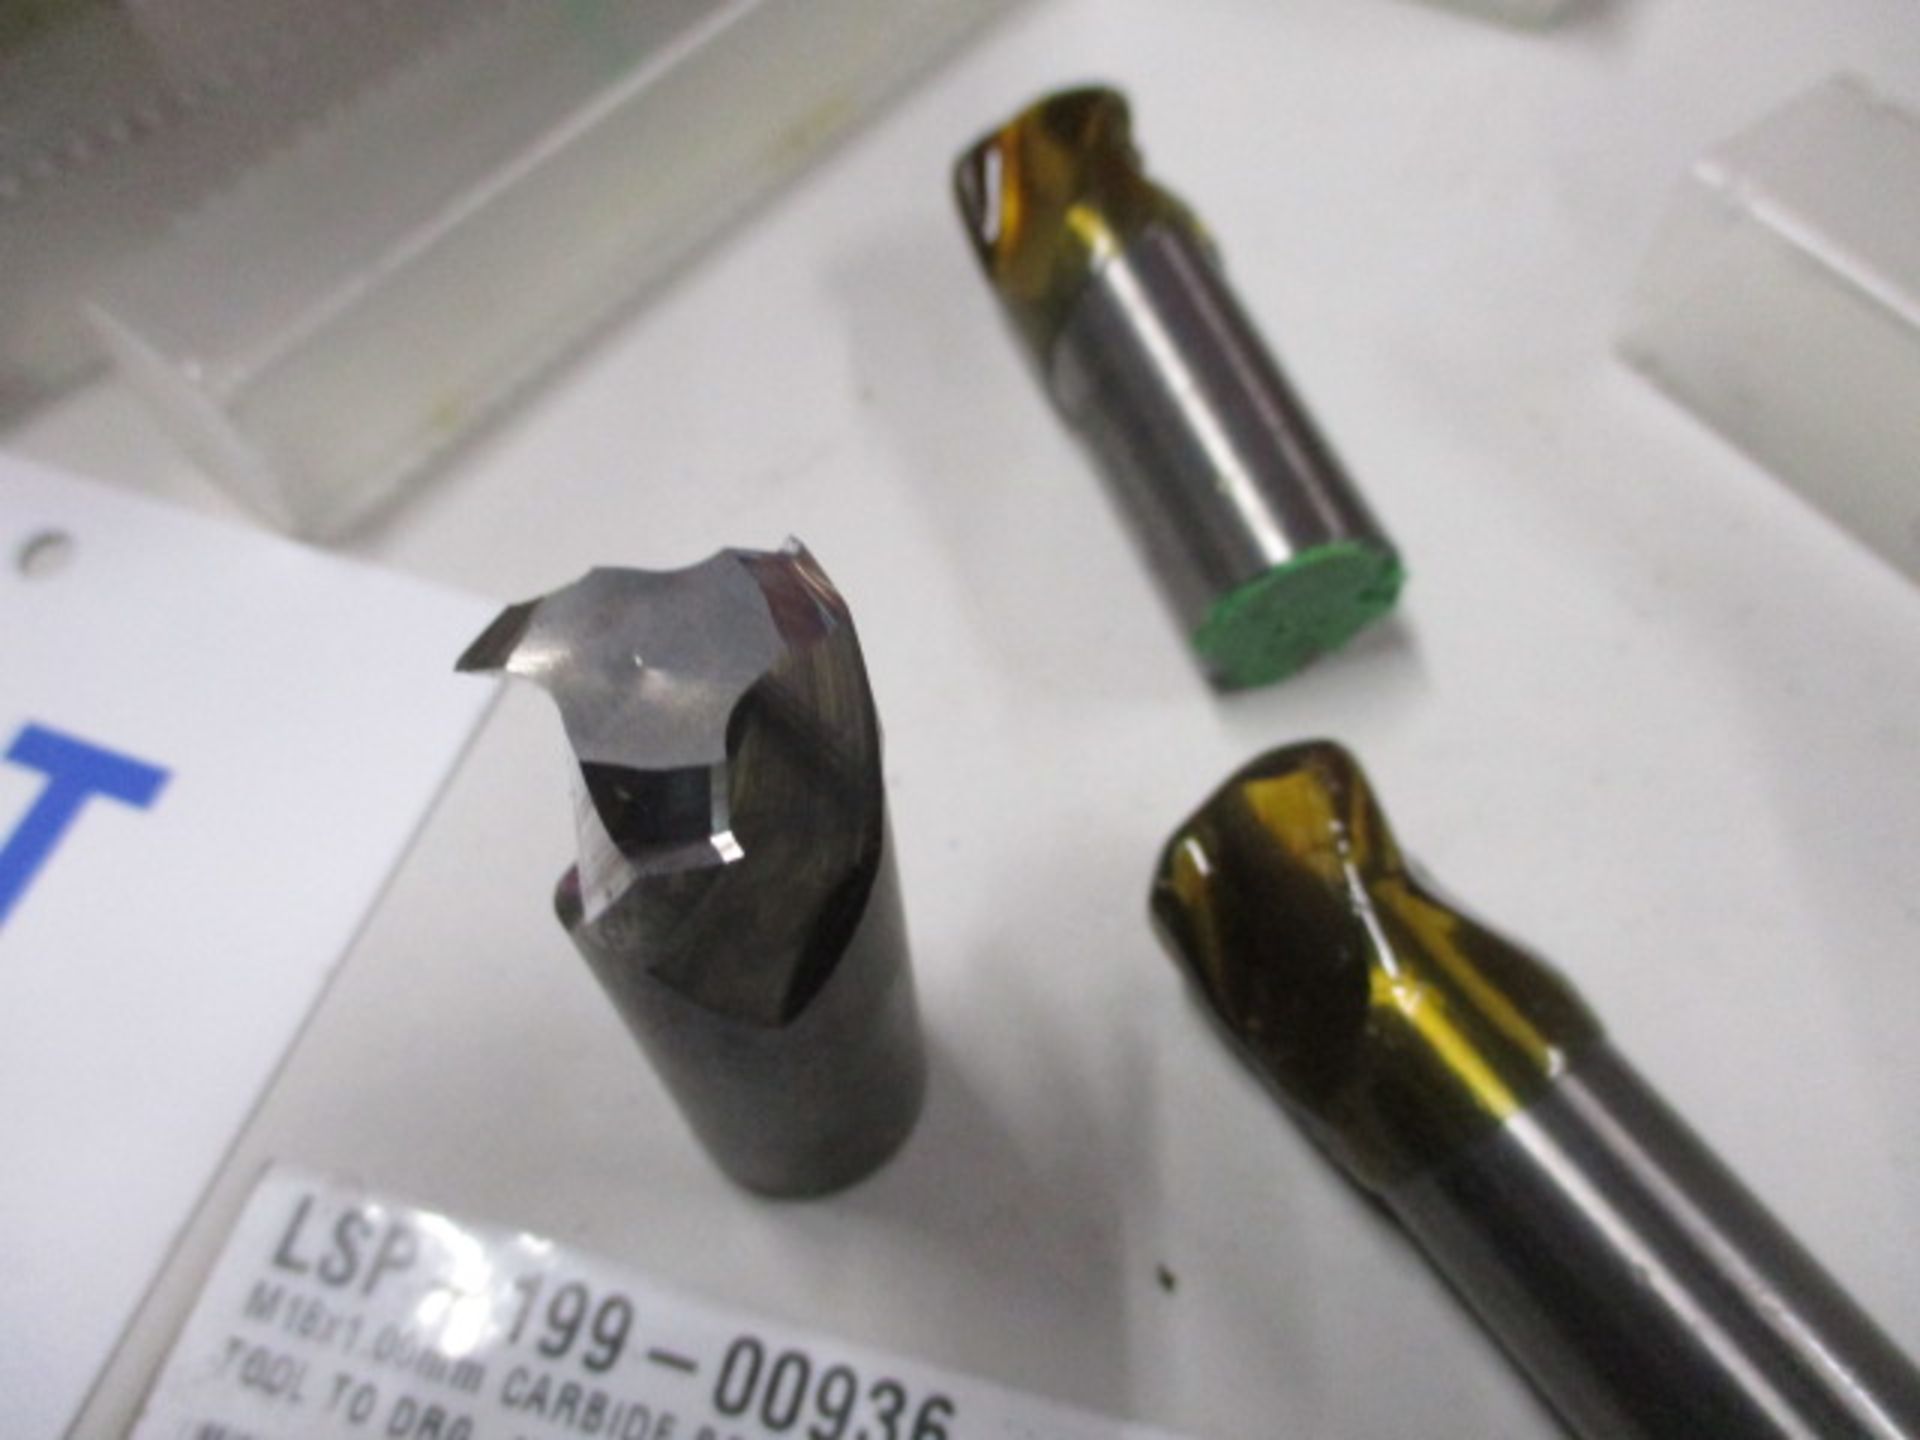 Carbide boring tool - Image 3 of 3